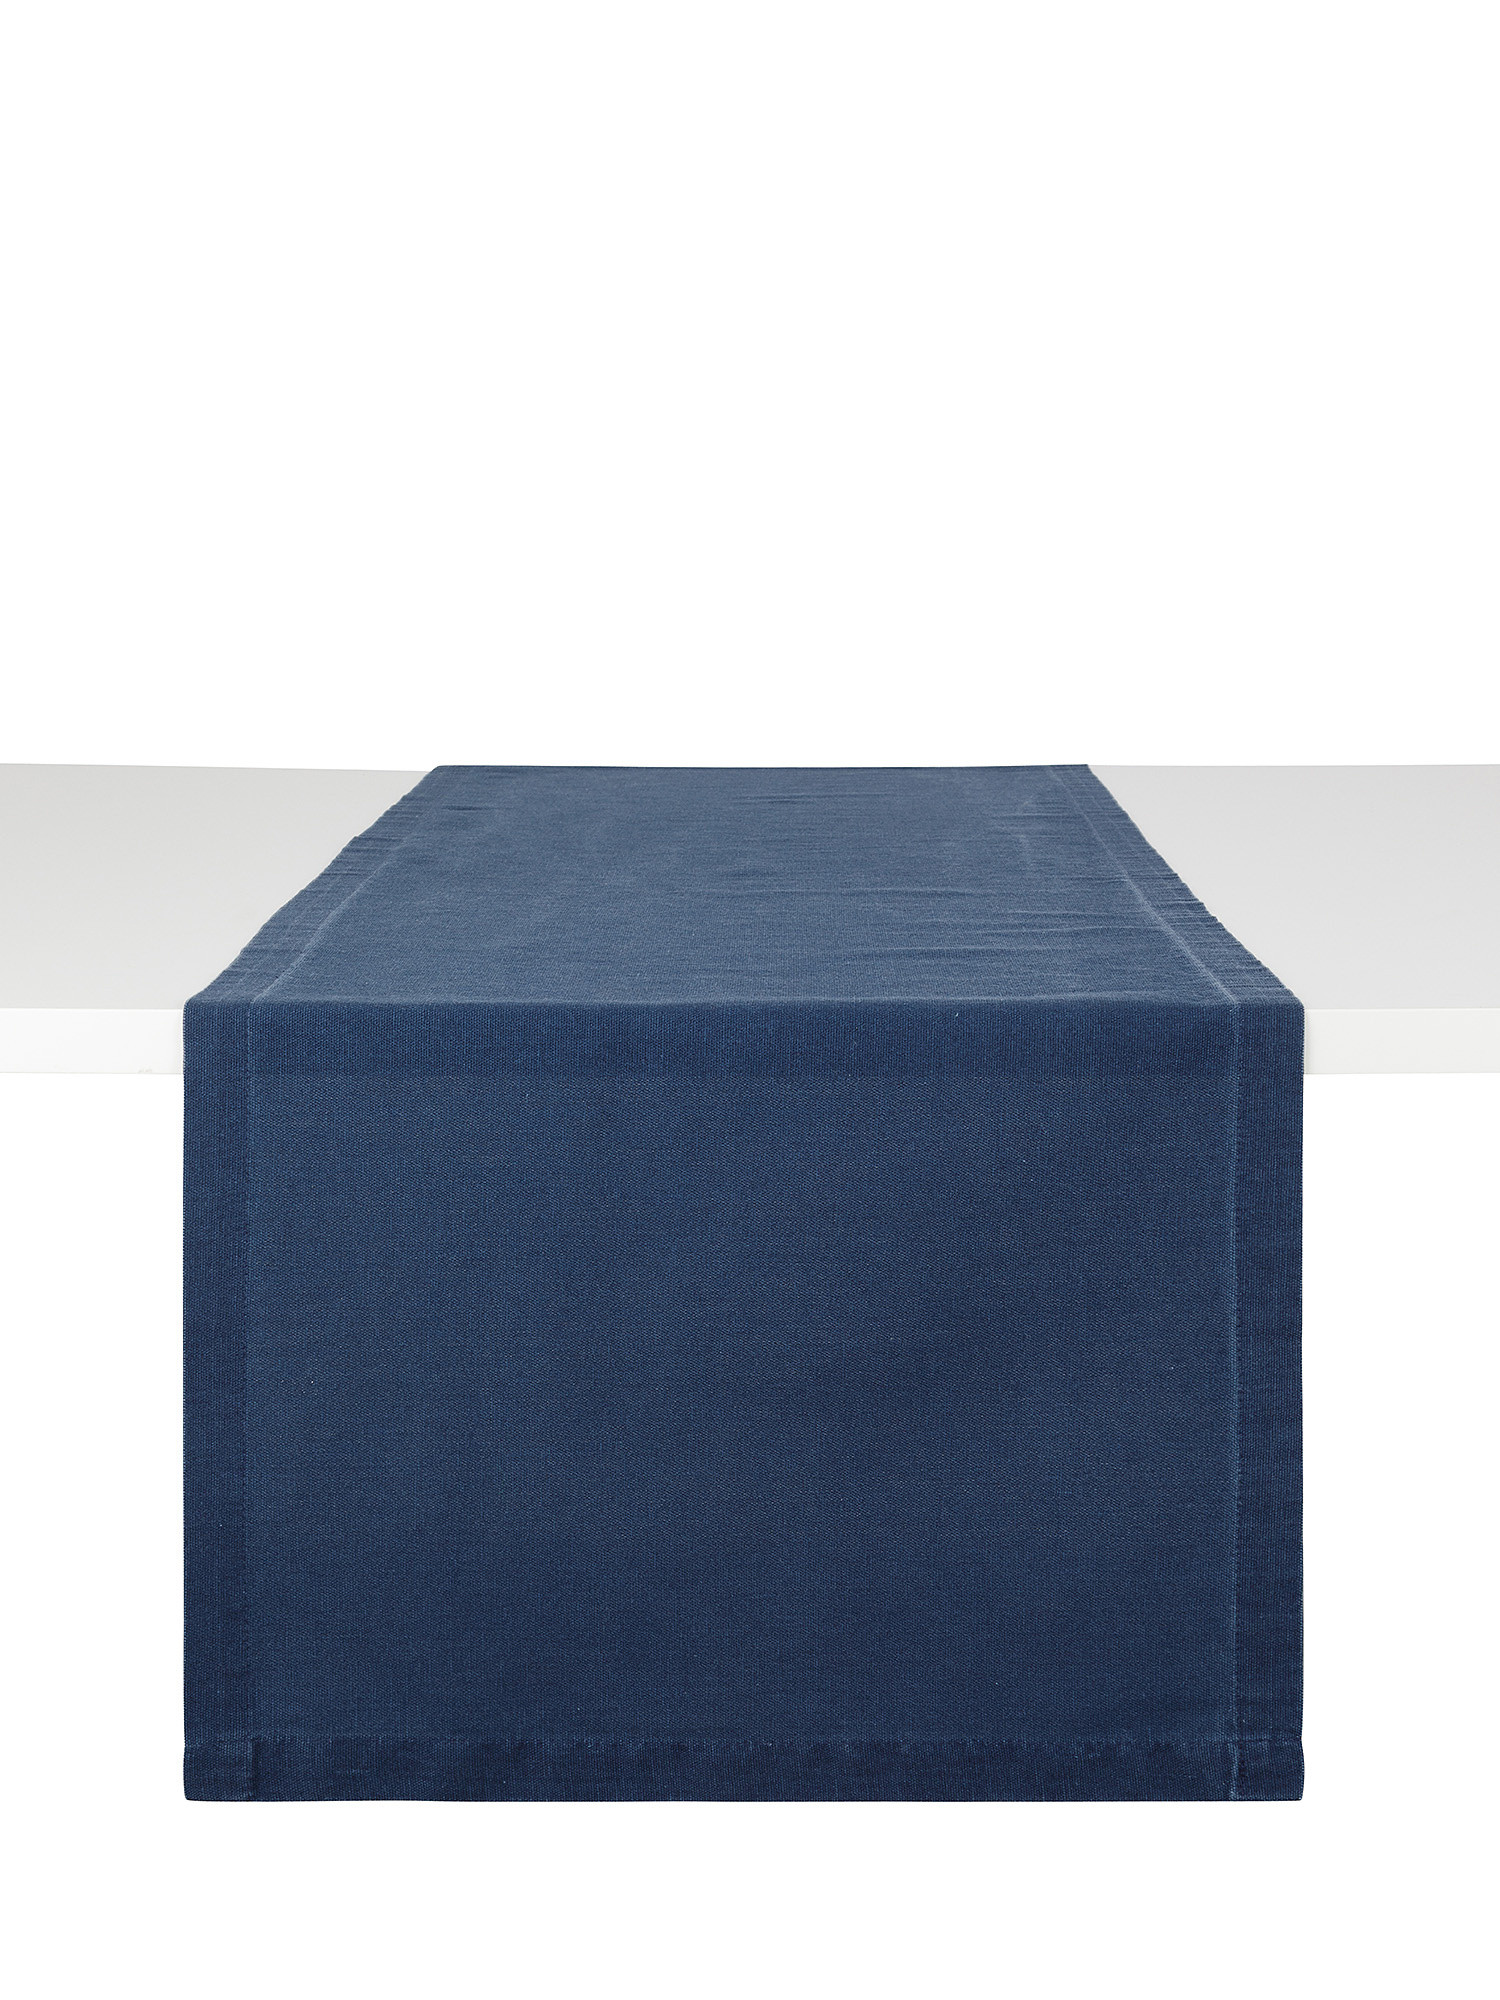 Solid color washed cotton table runner, Blue, large image number 0